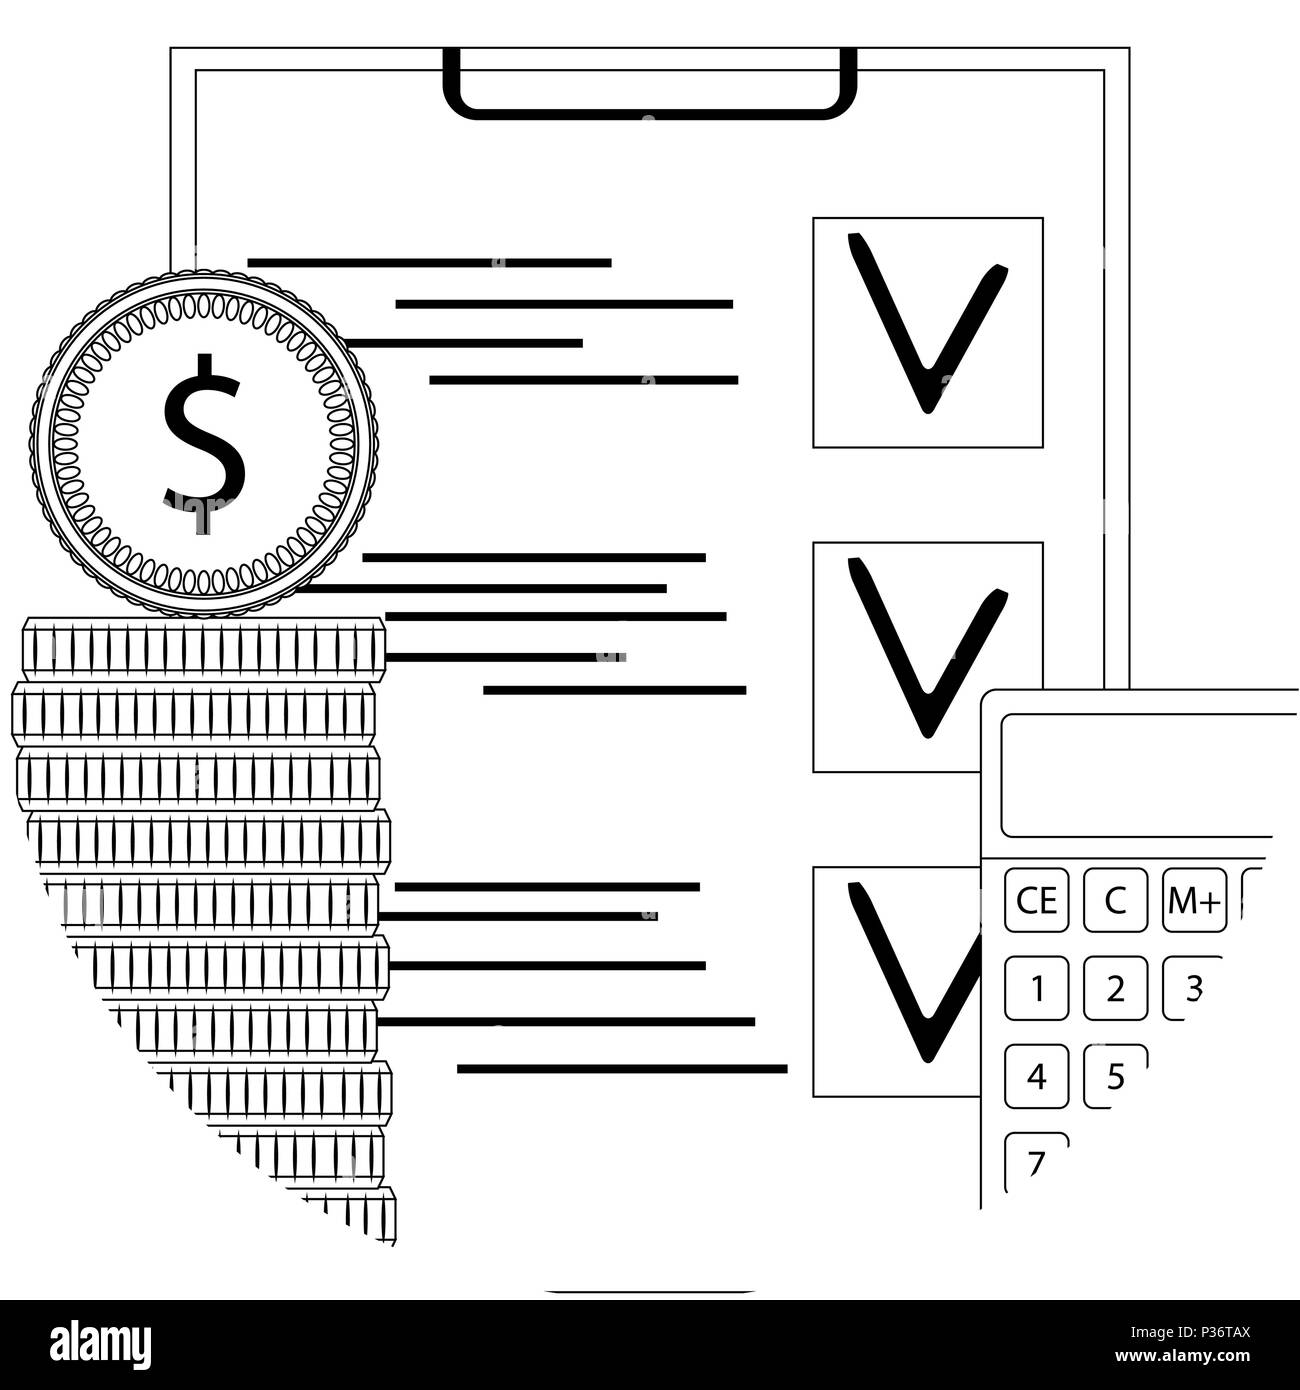 Finanzaudit Symbol Leitung. Prüfliste zur Inspektion - Kapital, das Ergebnis Papierkram, Vektor, Abbildung Stock Vektor